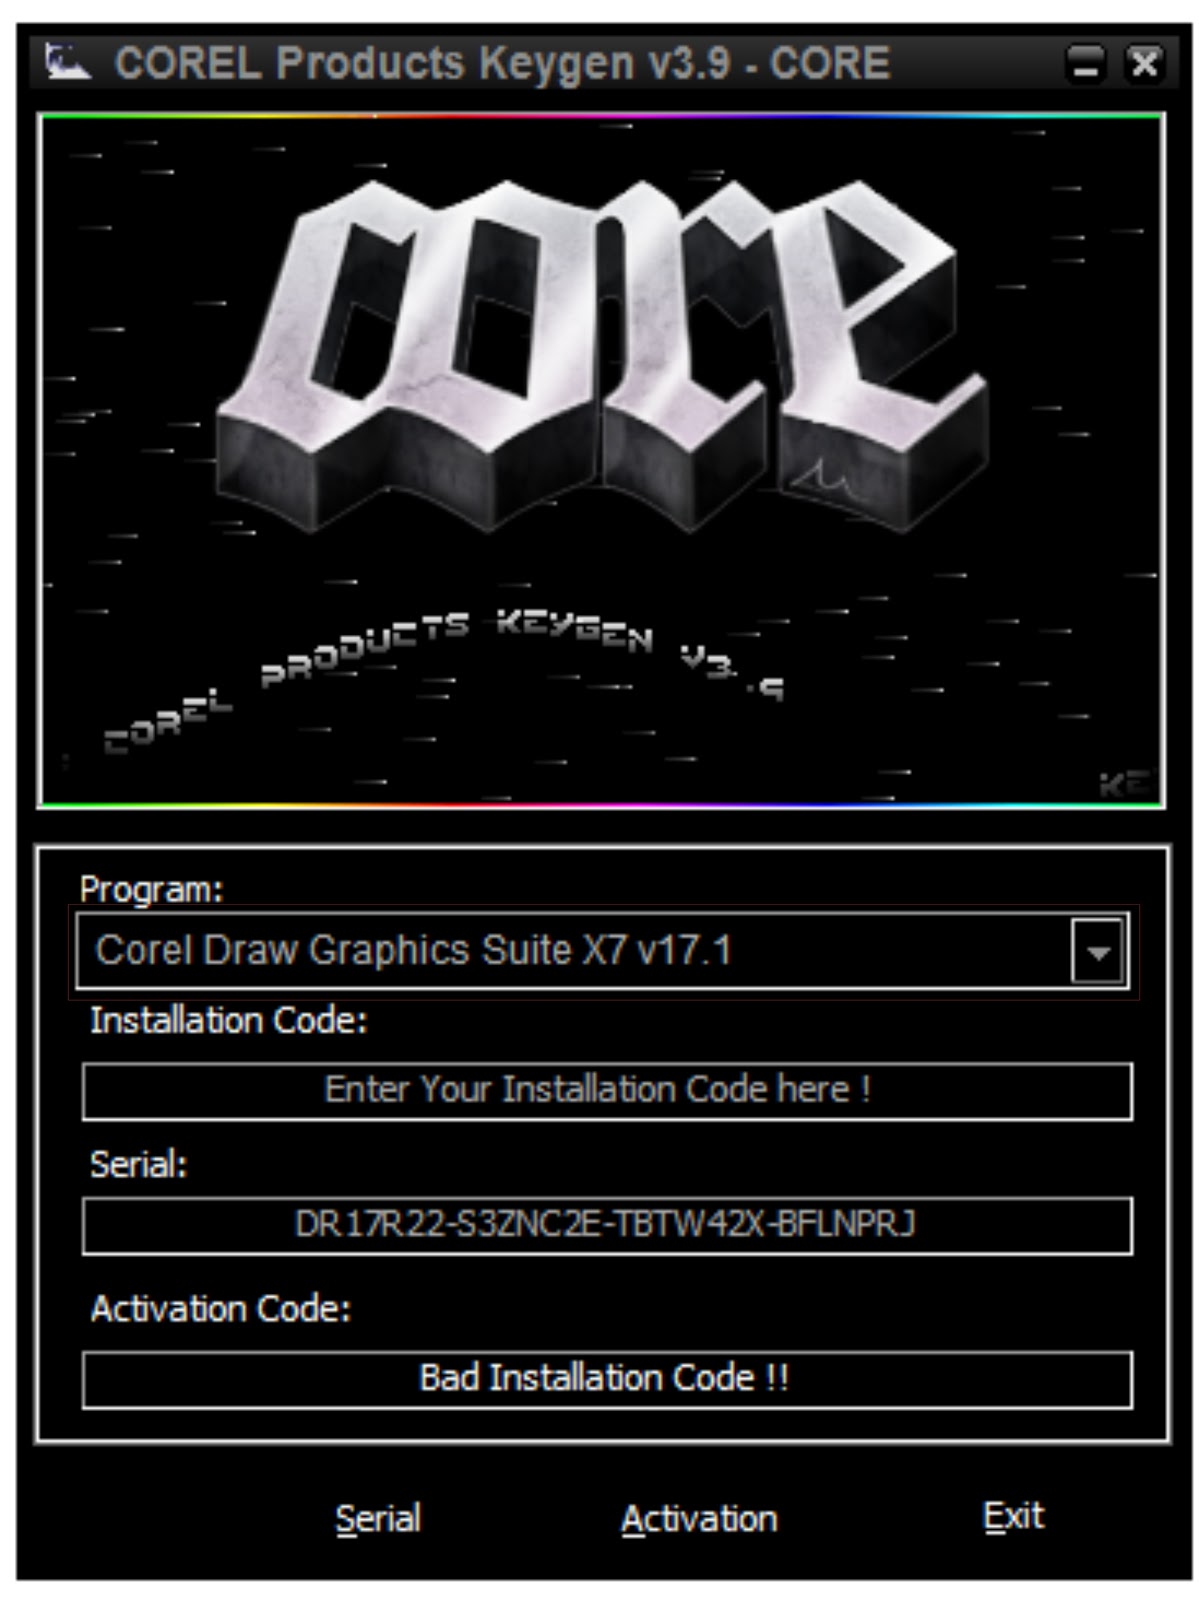 corel videostudio pro x6 ultimate download